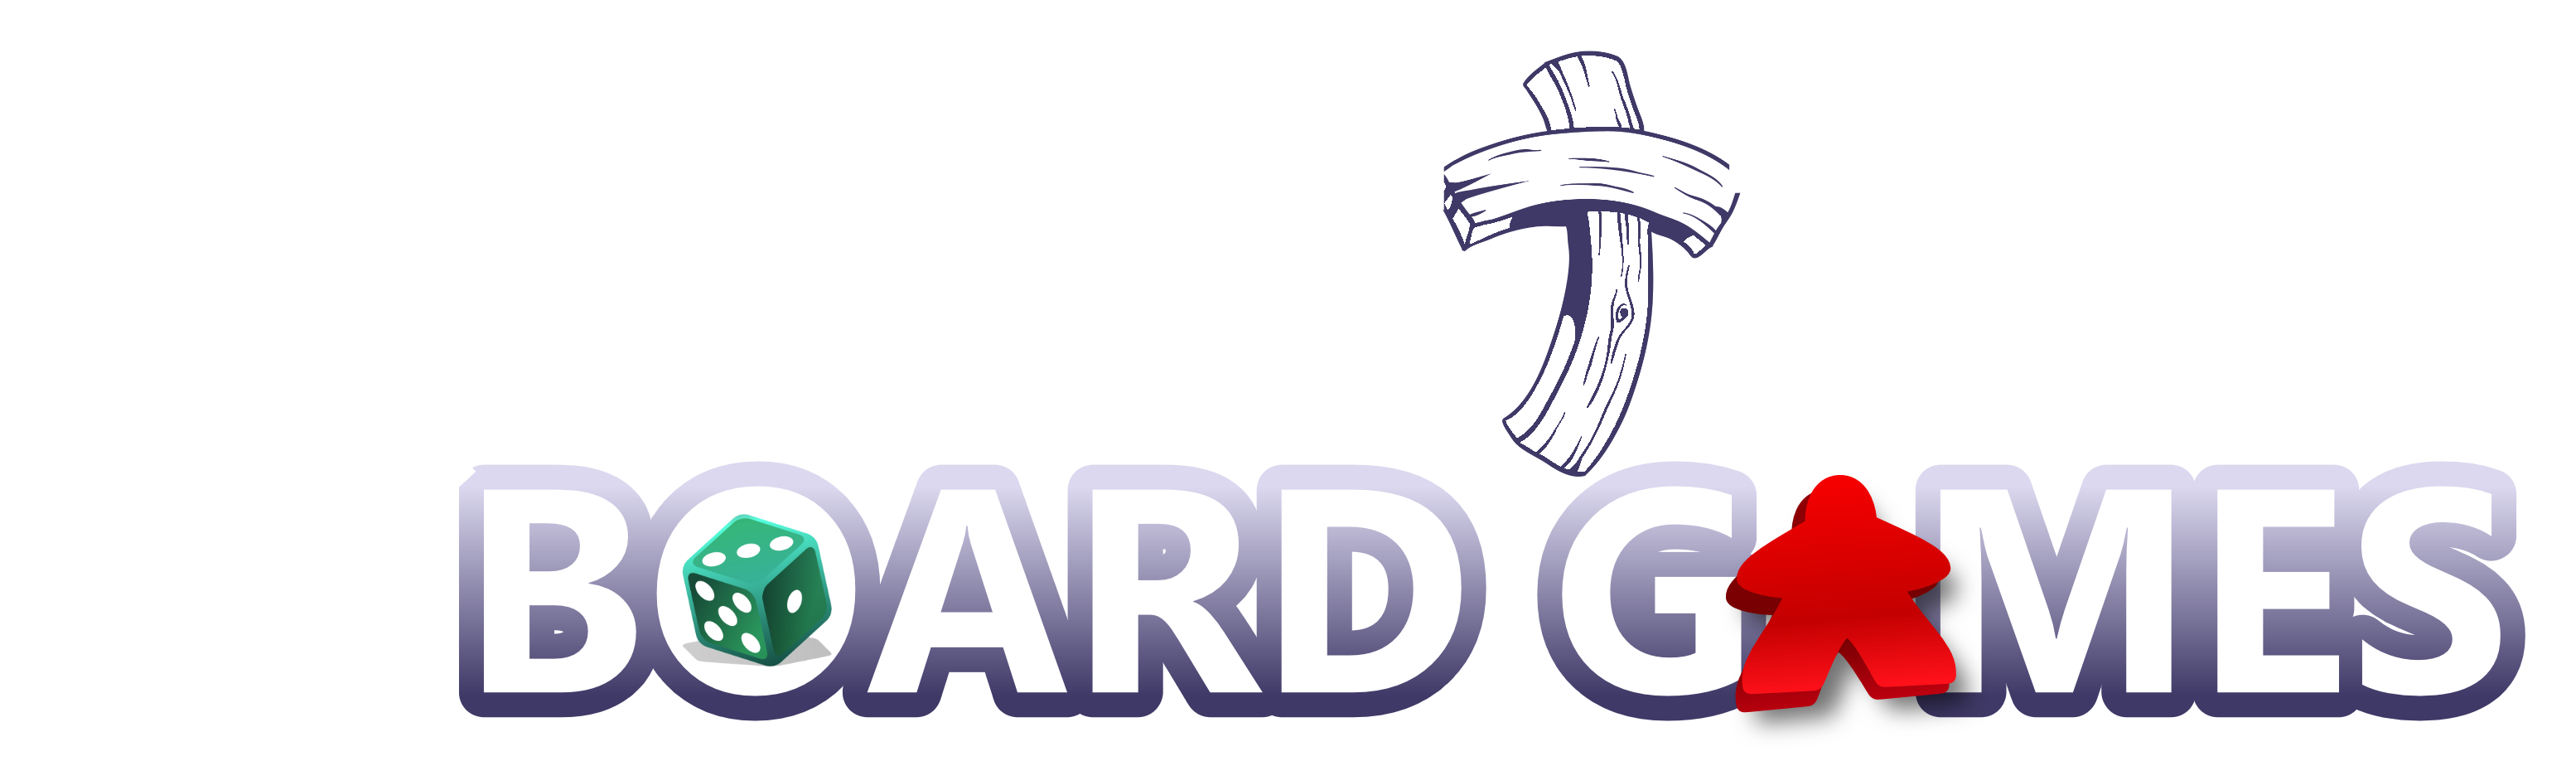 Christian Board Games